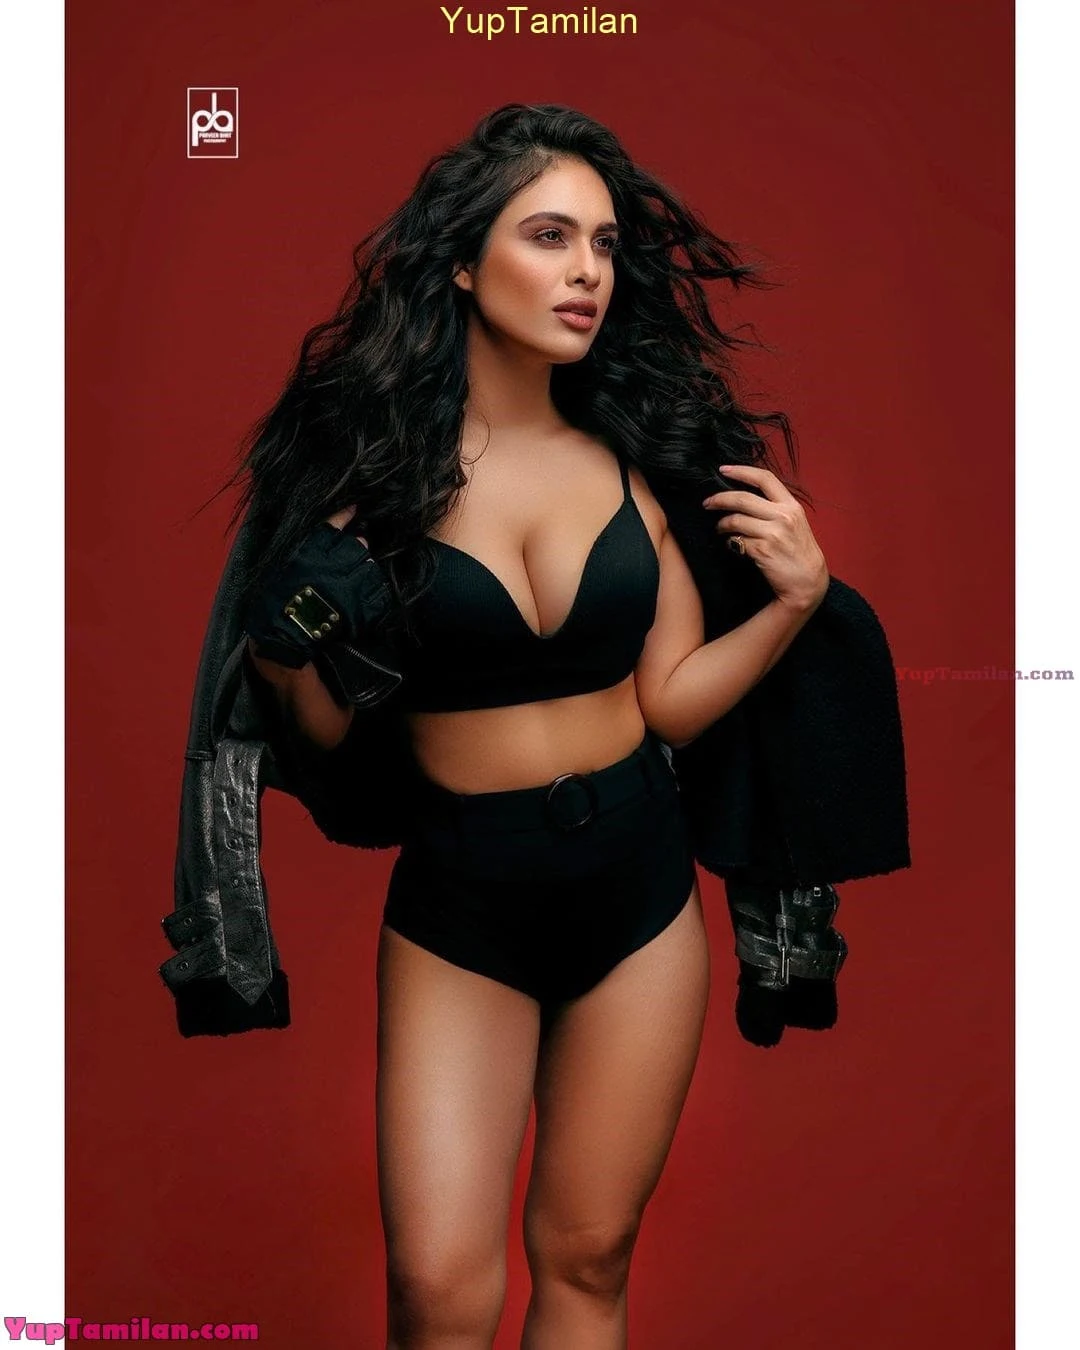 Neha Malik Sexy Bikini Pic Flaunts Hot Curves